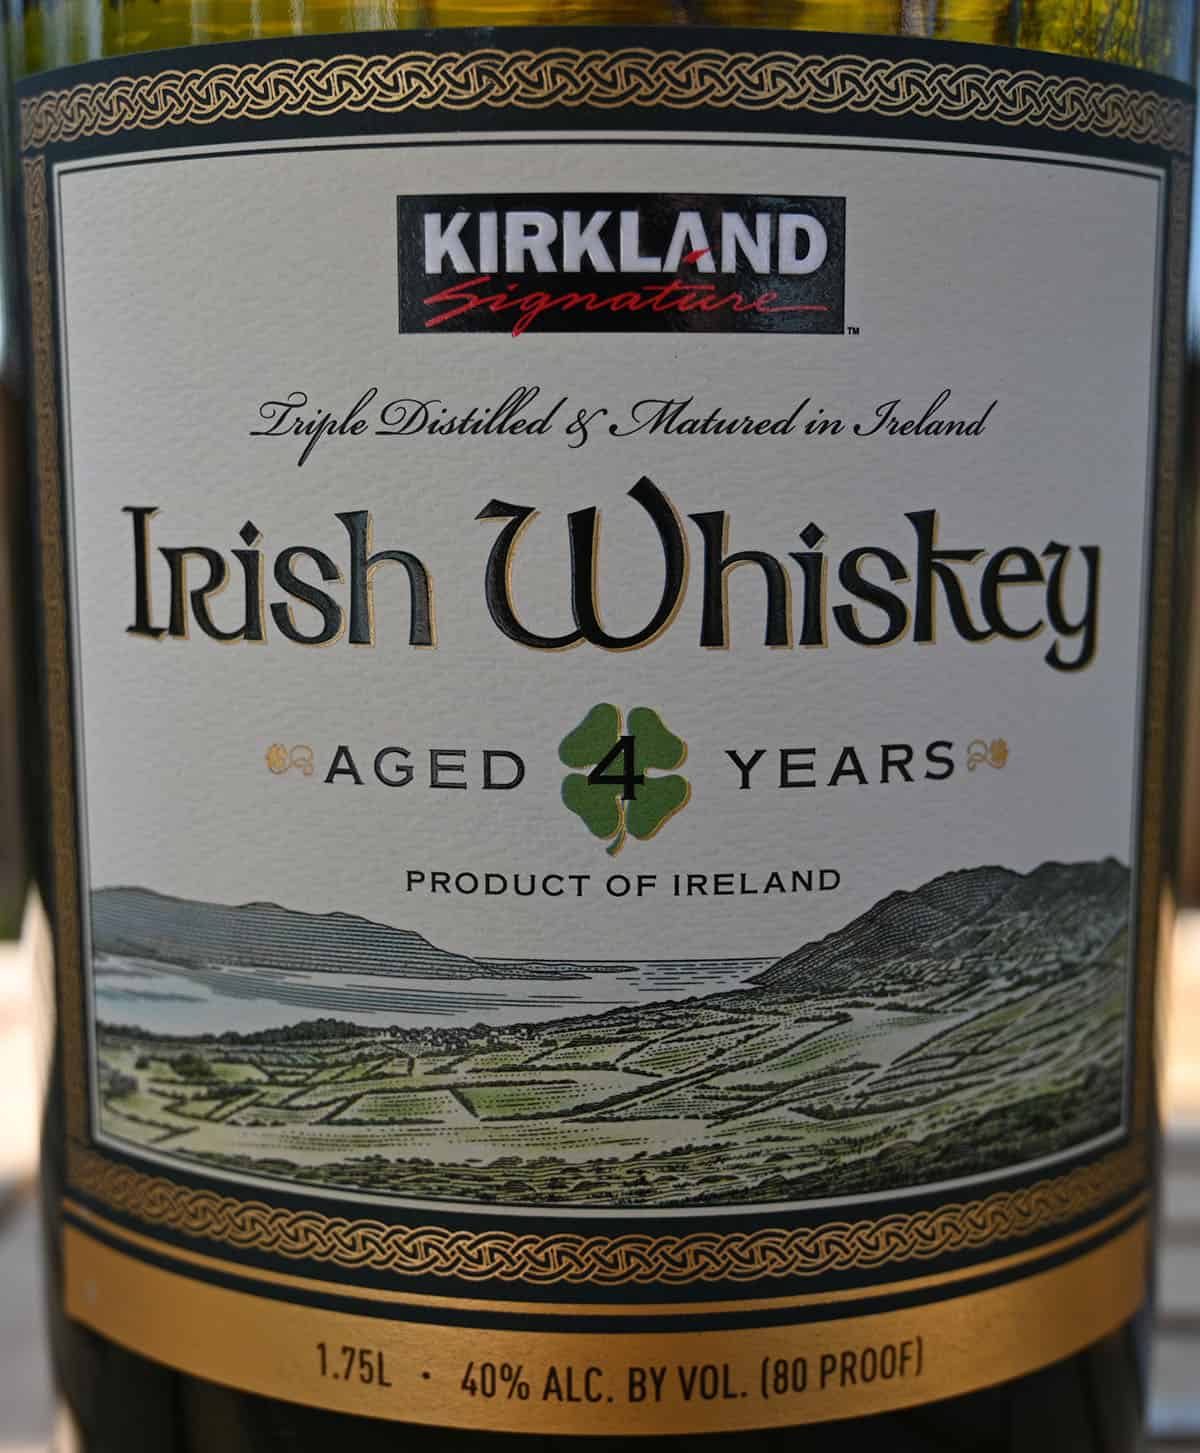 Image of the front label on the Kirkland Signature Irish Whiskey.